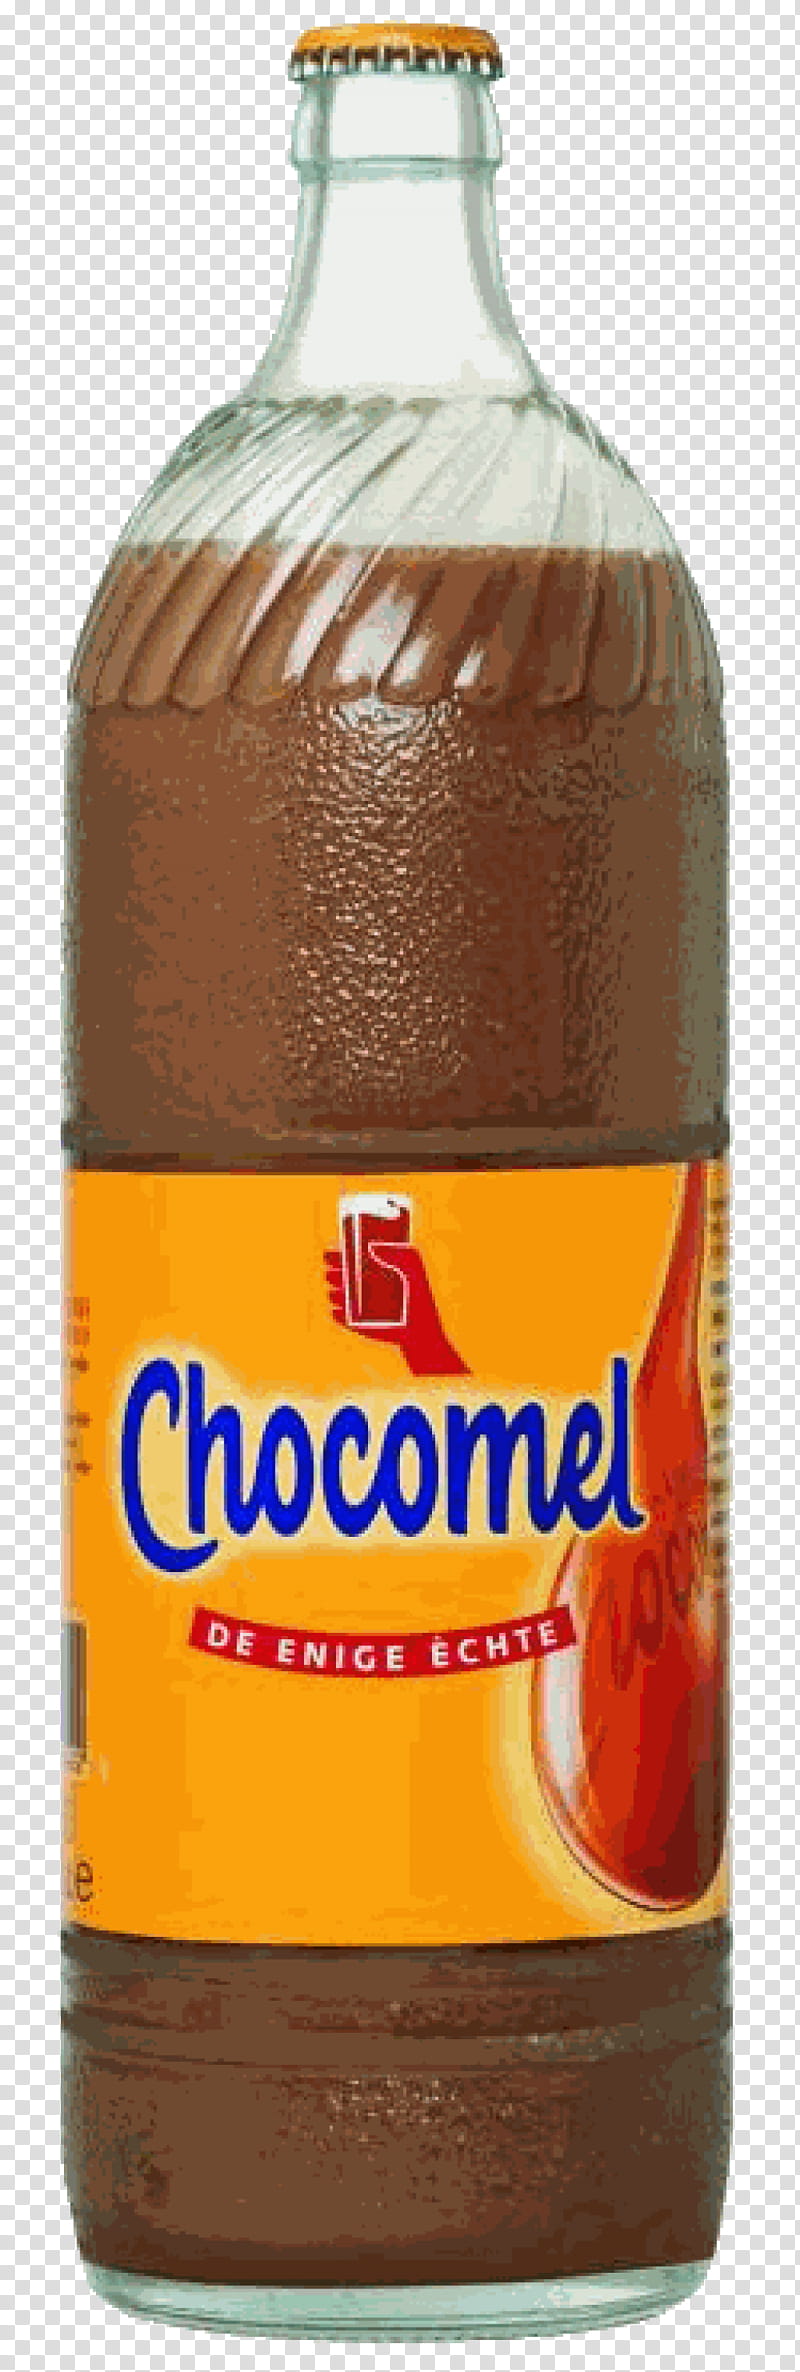 Chocolate Milk, Chocomel, Bottle, Glass Bottle, Liter, Fizzy Drinks, Food, Lidl transparent background PNG clipart